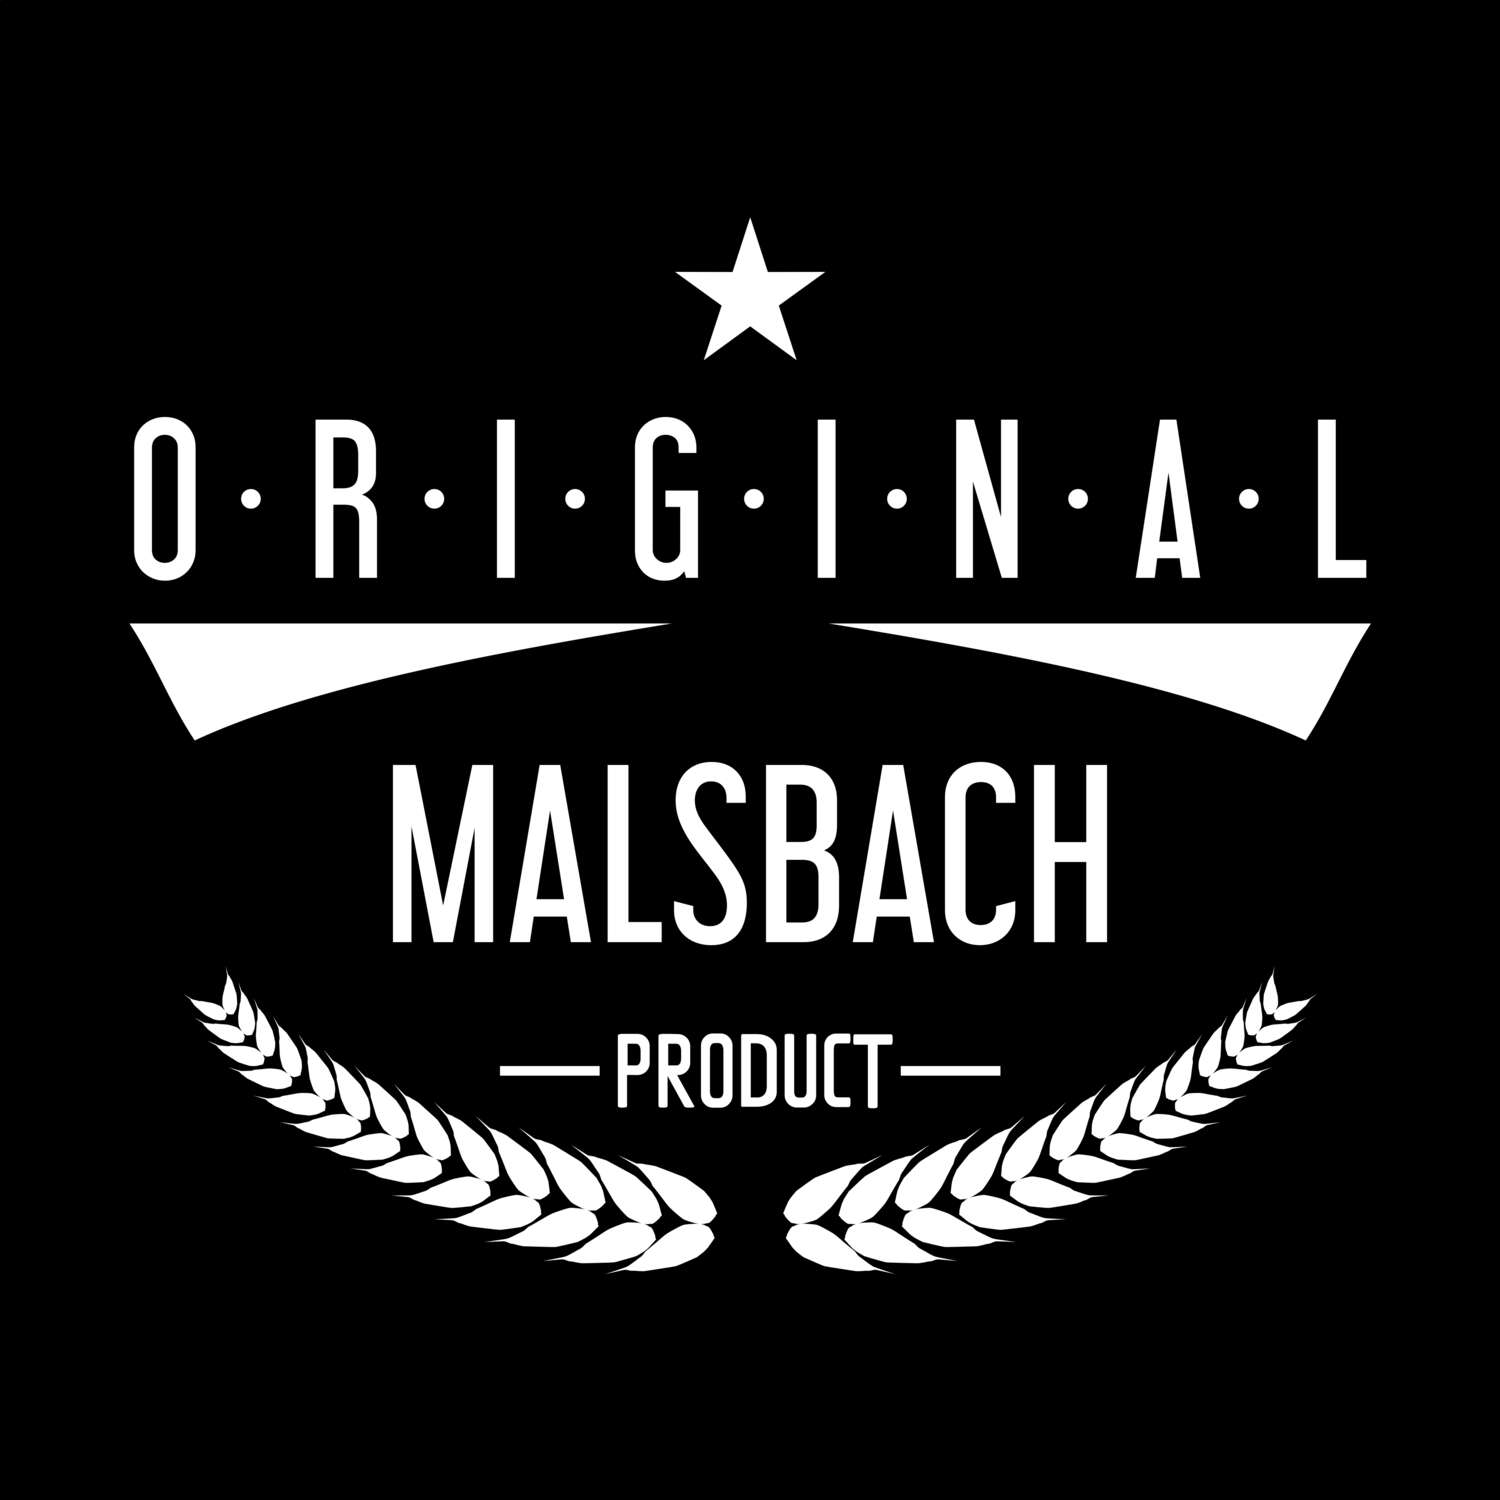 Malsbach T-Shirt »Original Product«